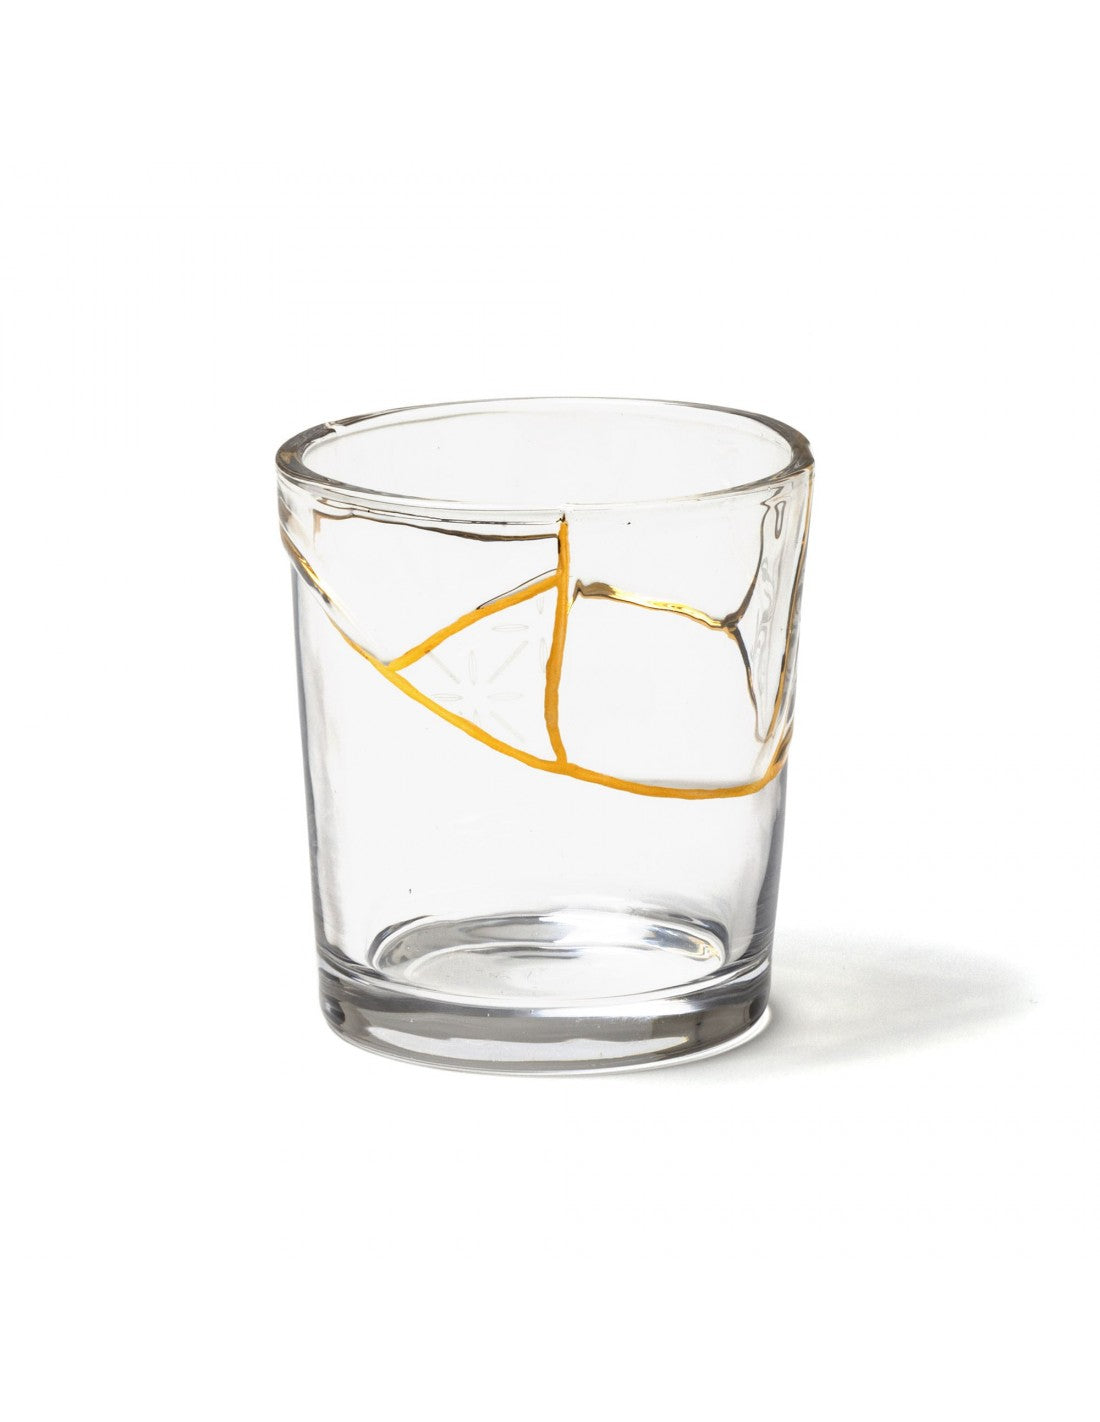 SELETTI Kintsugi Glass - n'3 - set of 2